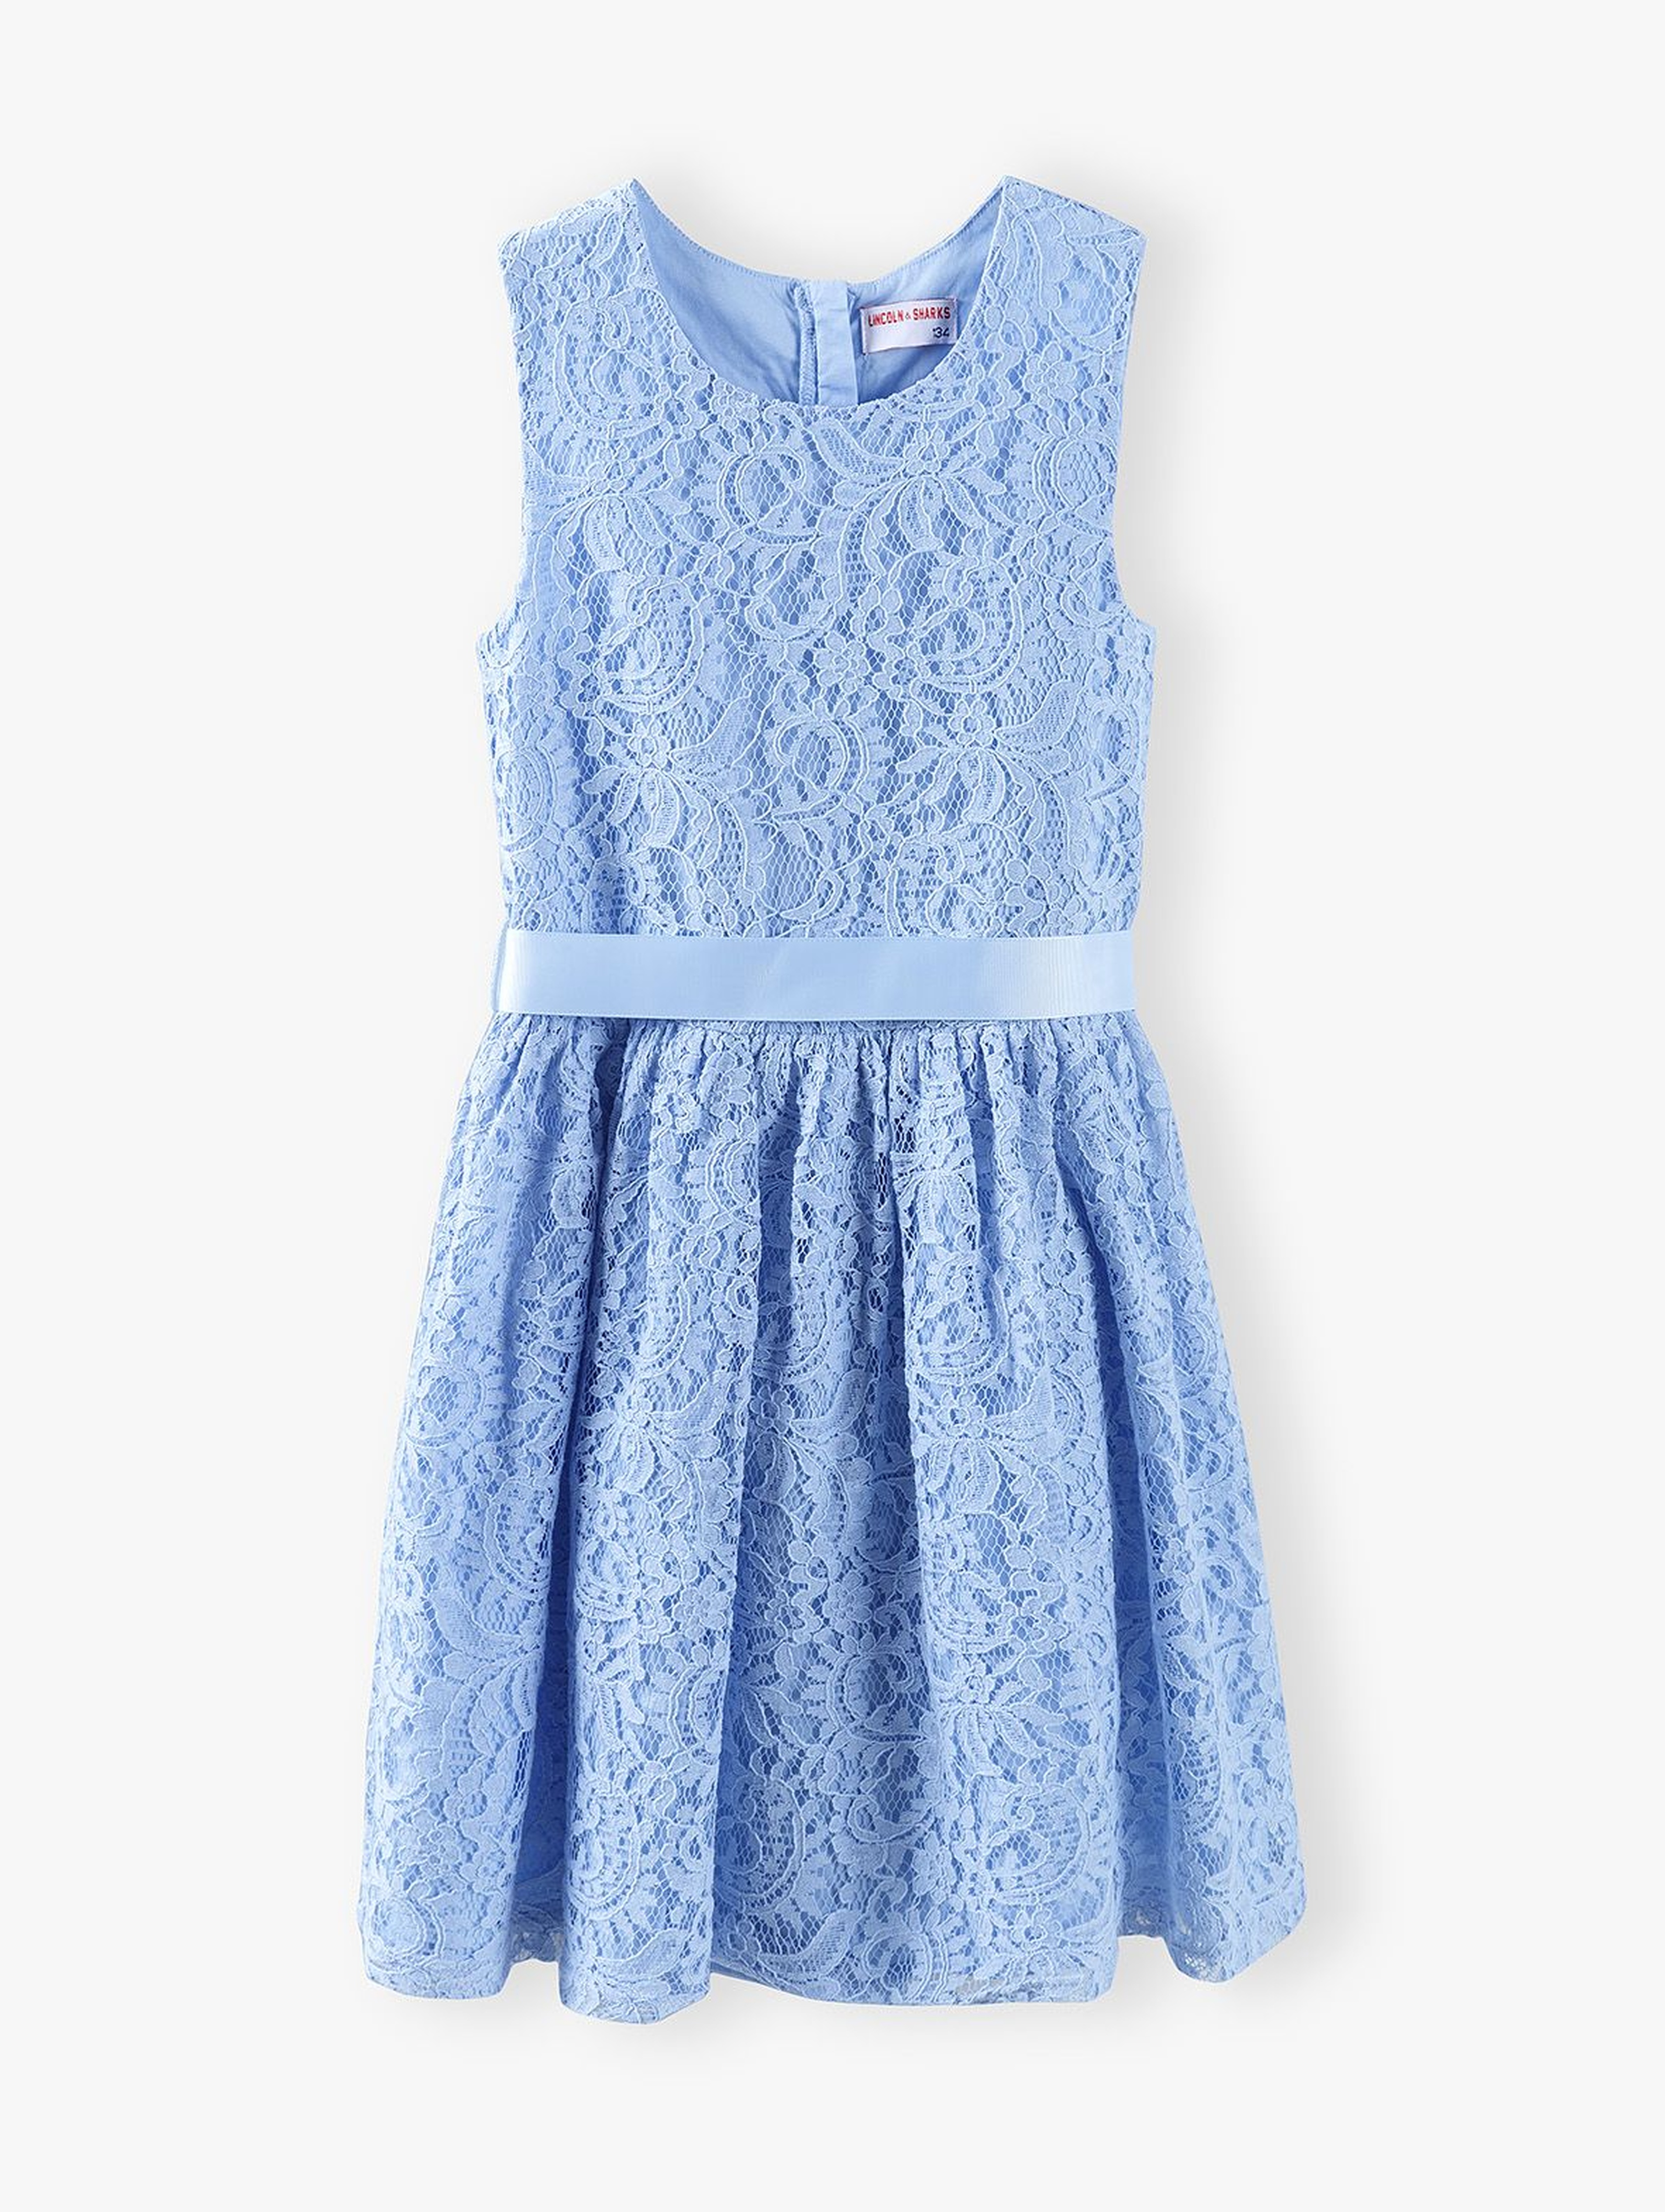 Elegancka koronkowa sukienka dziecięca - niebieska